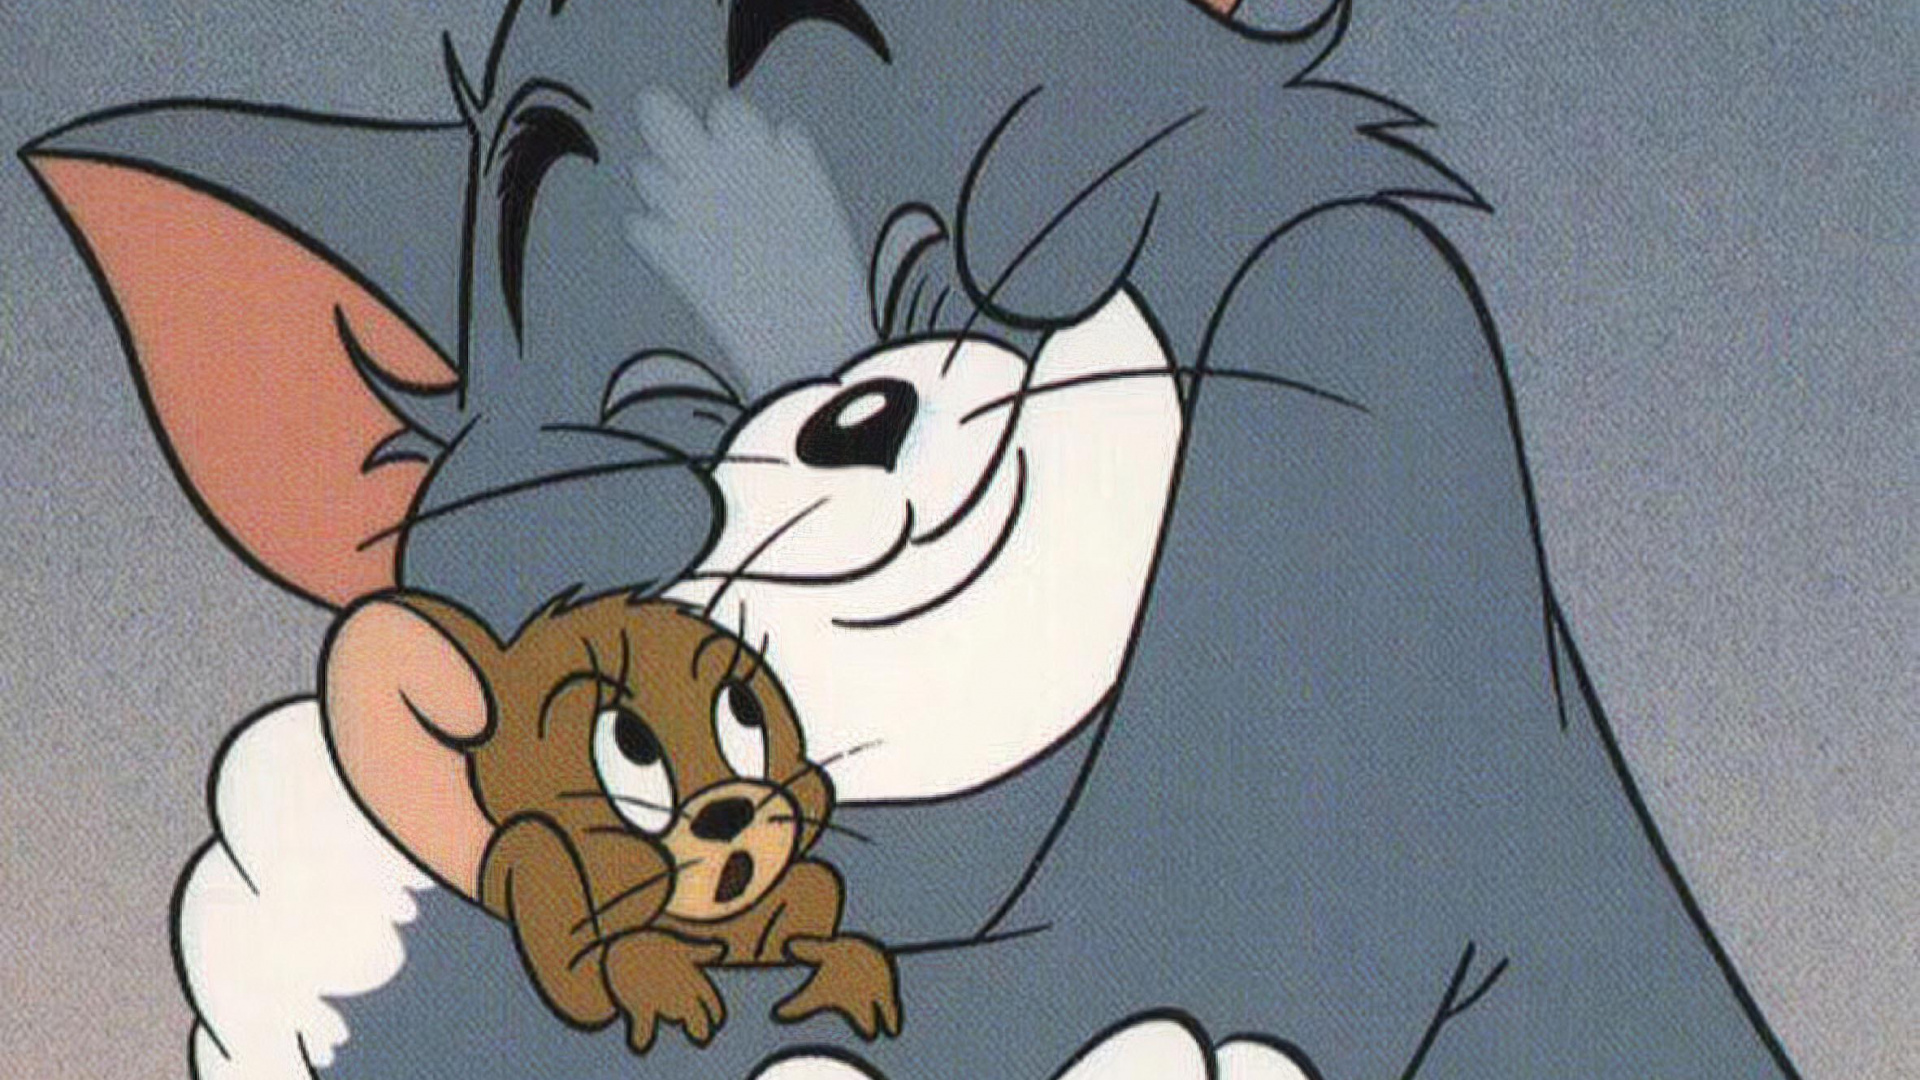 Tom Und Jerry Ästhetik, Tom Katze, Jerry Maus, Ästhetik, Cartoon. Wallpaper in 1920x1080 Resolution